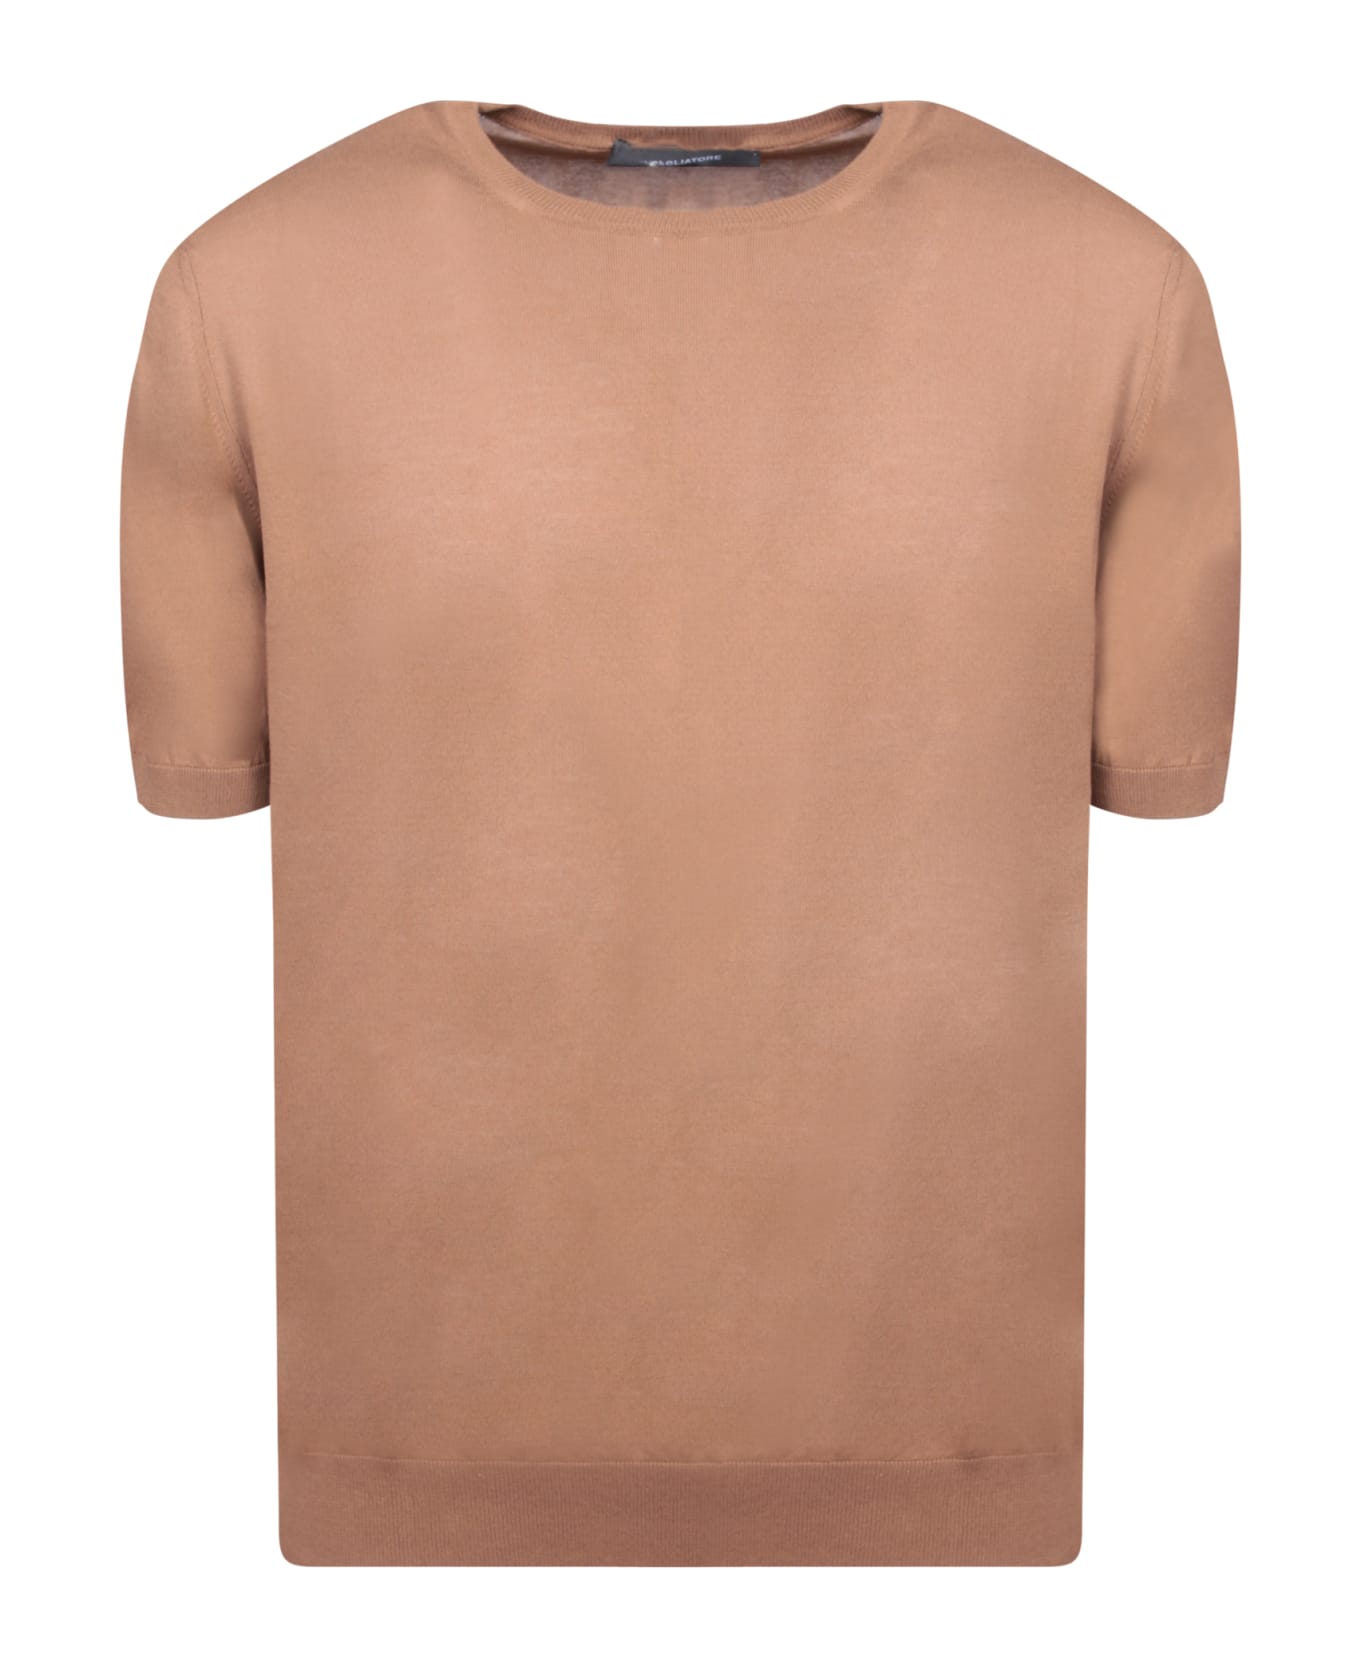 Tagliatore Short Sleeves Brown T-shirt - Brown